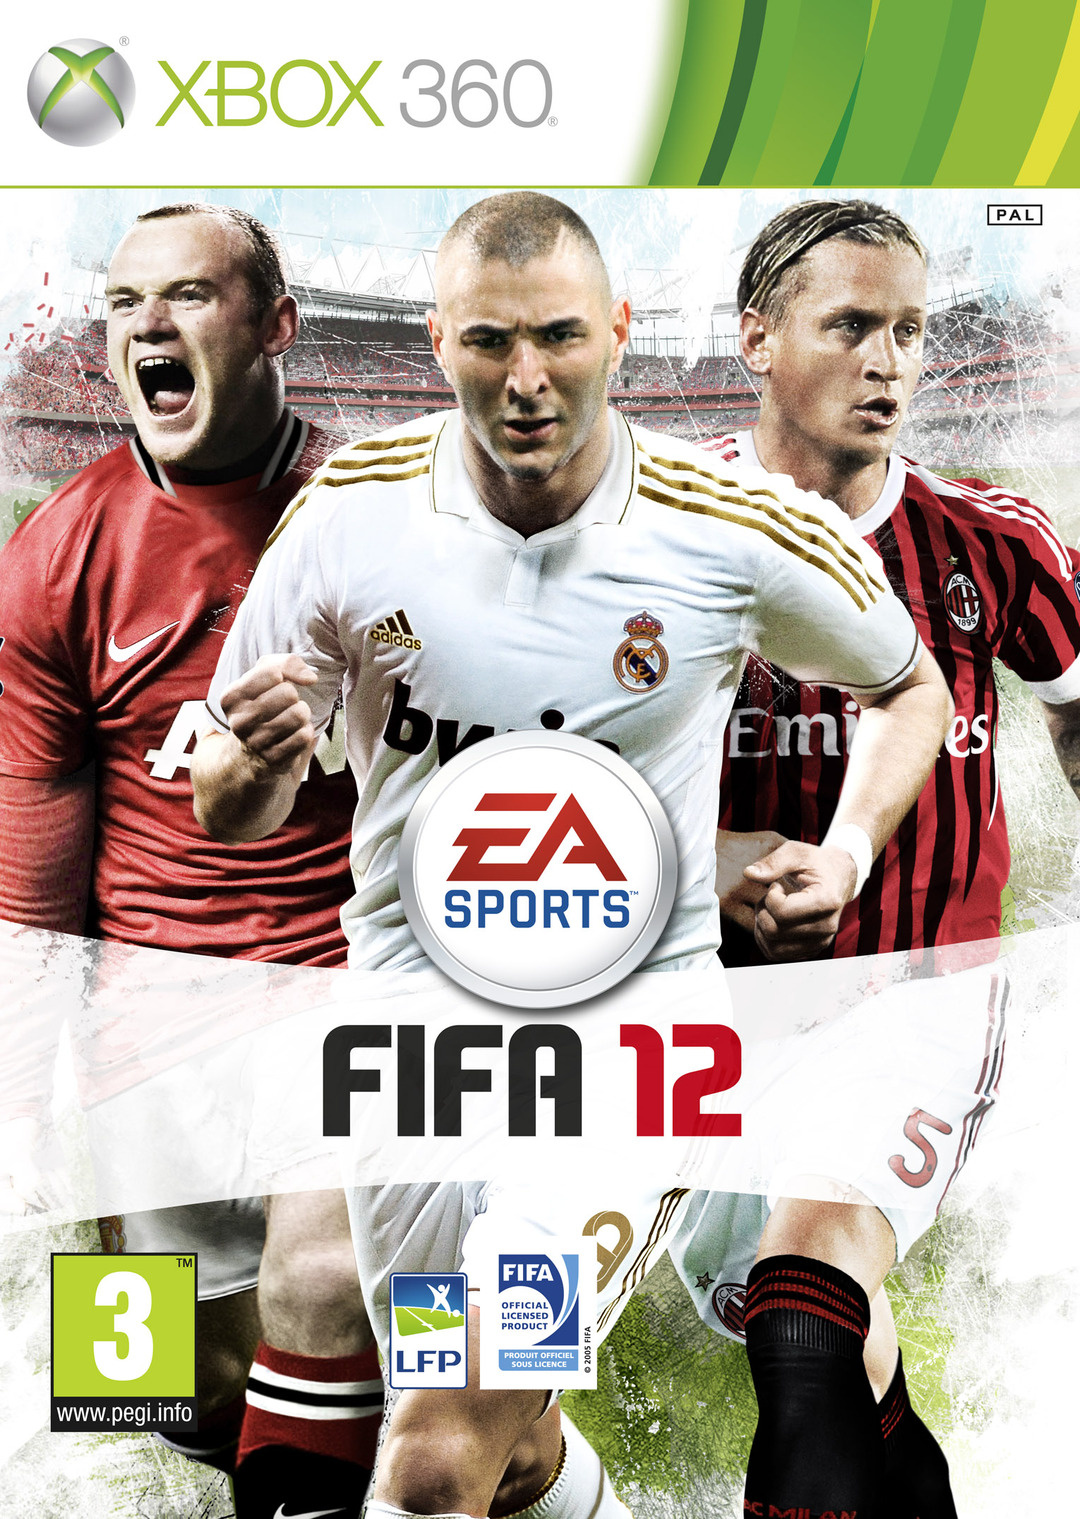 FIFA 12 PAL XBOX360 (exclue) [FS][WU][US]  Jaquette-fifa-12-xbox-360-cover-avant-g-1311972220